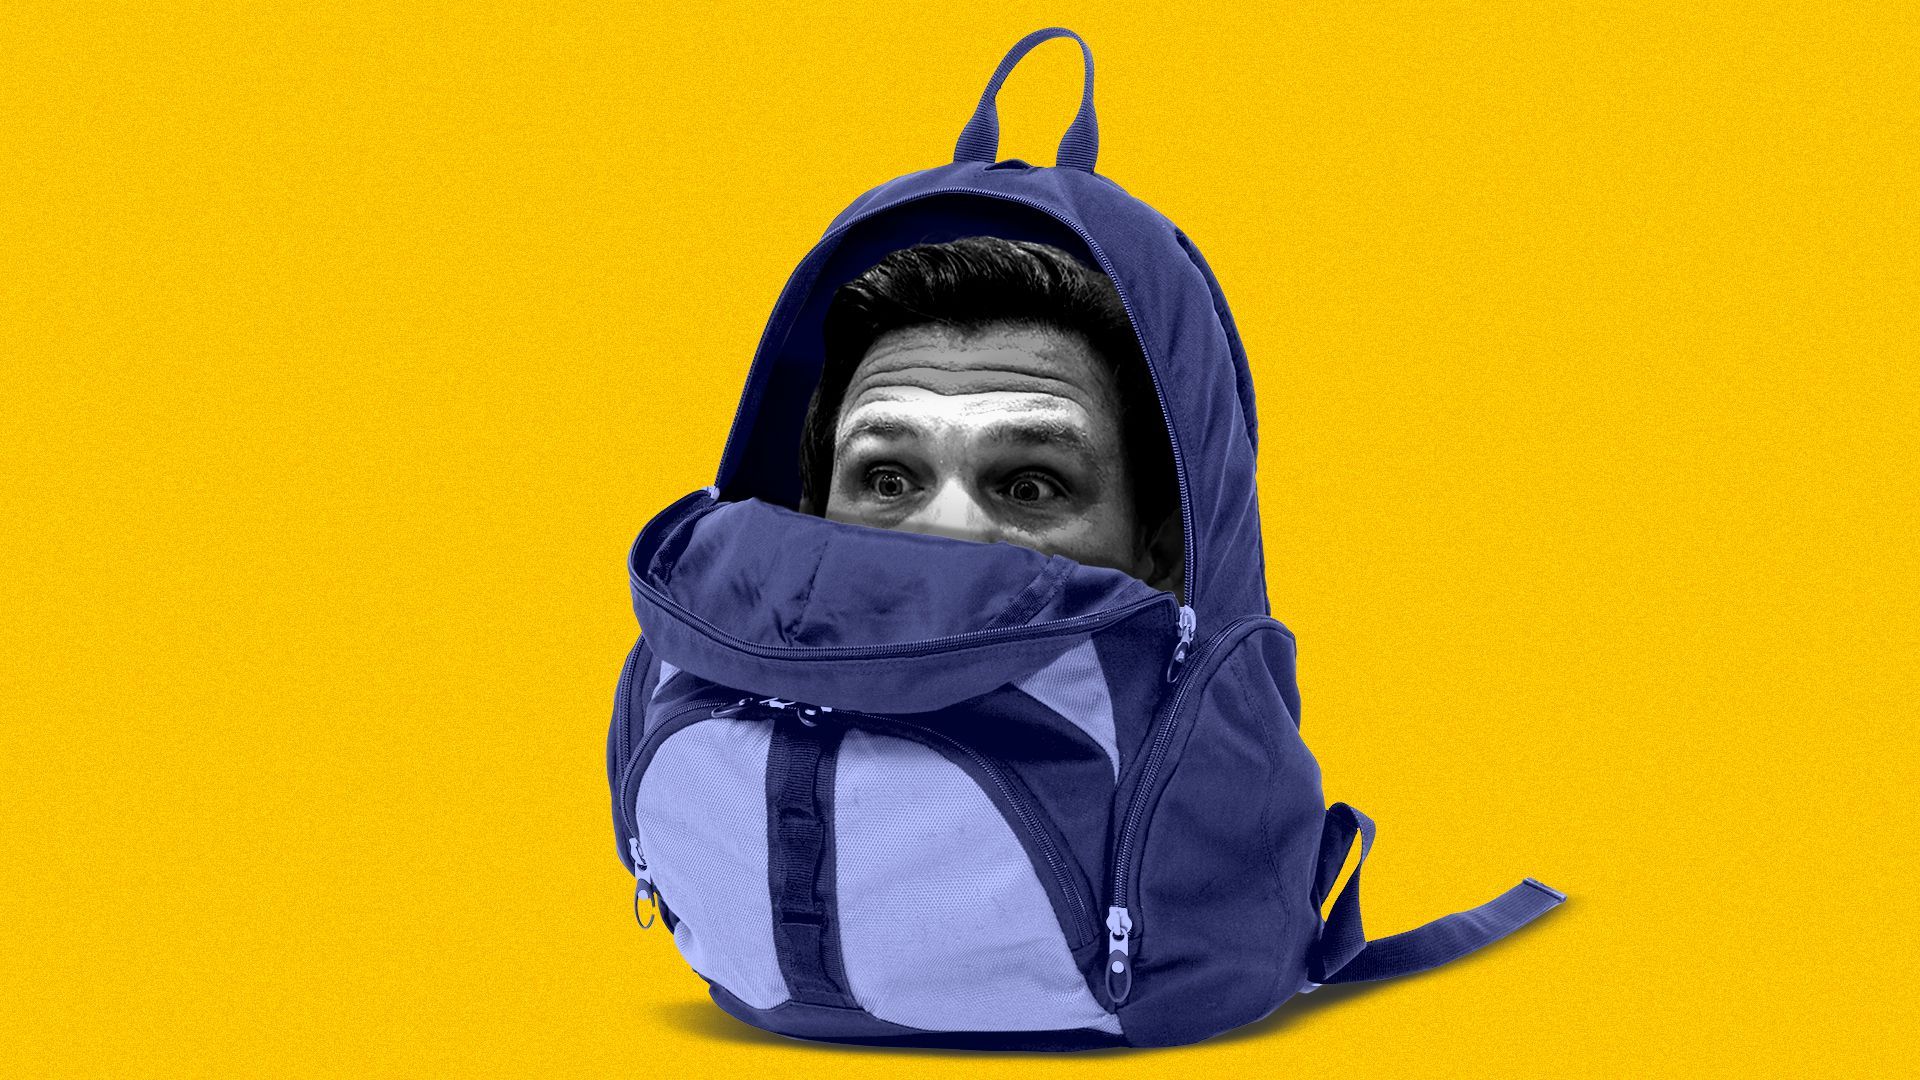 Photo illustration of Florida Gov. Ron DeSantis inside a backpack, peeking out.